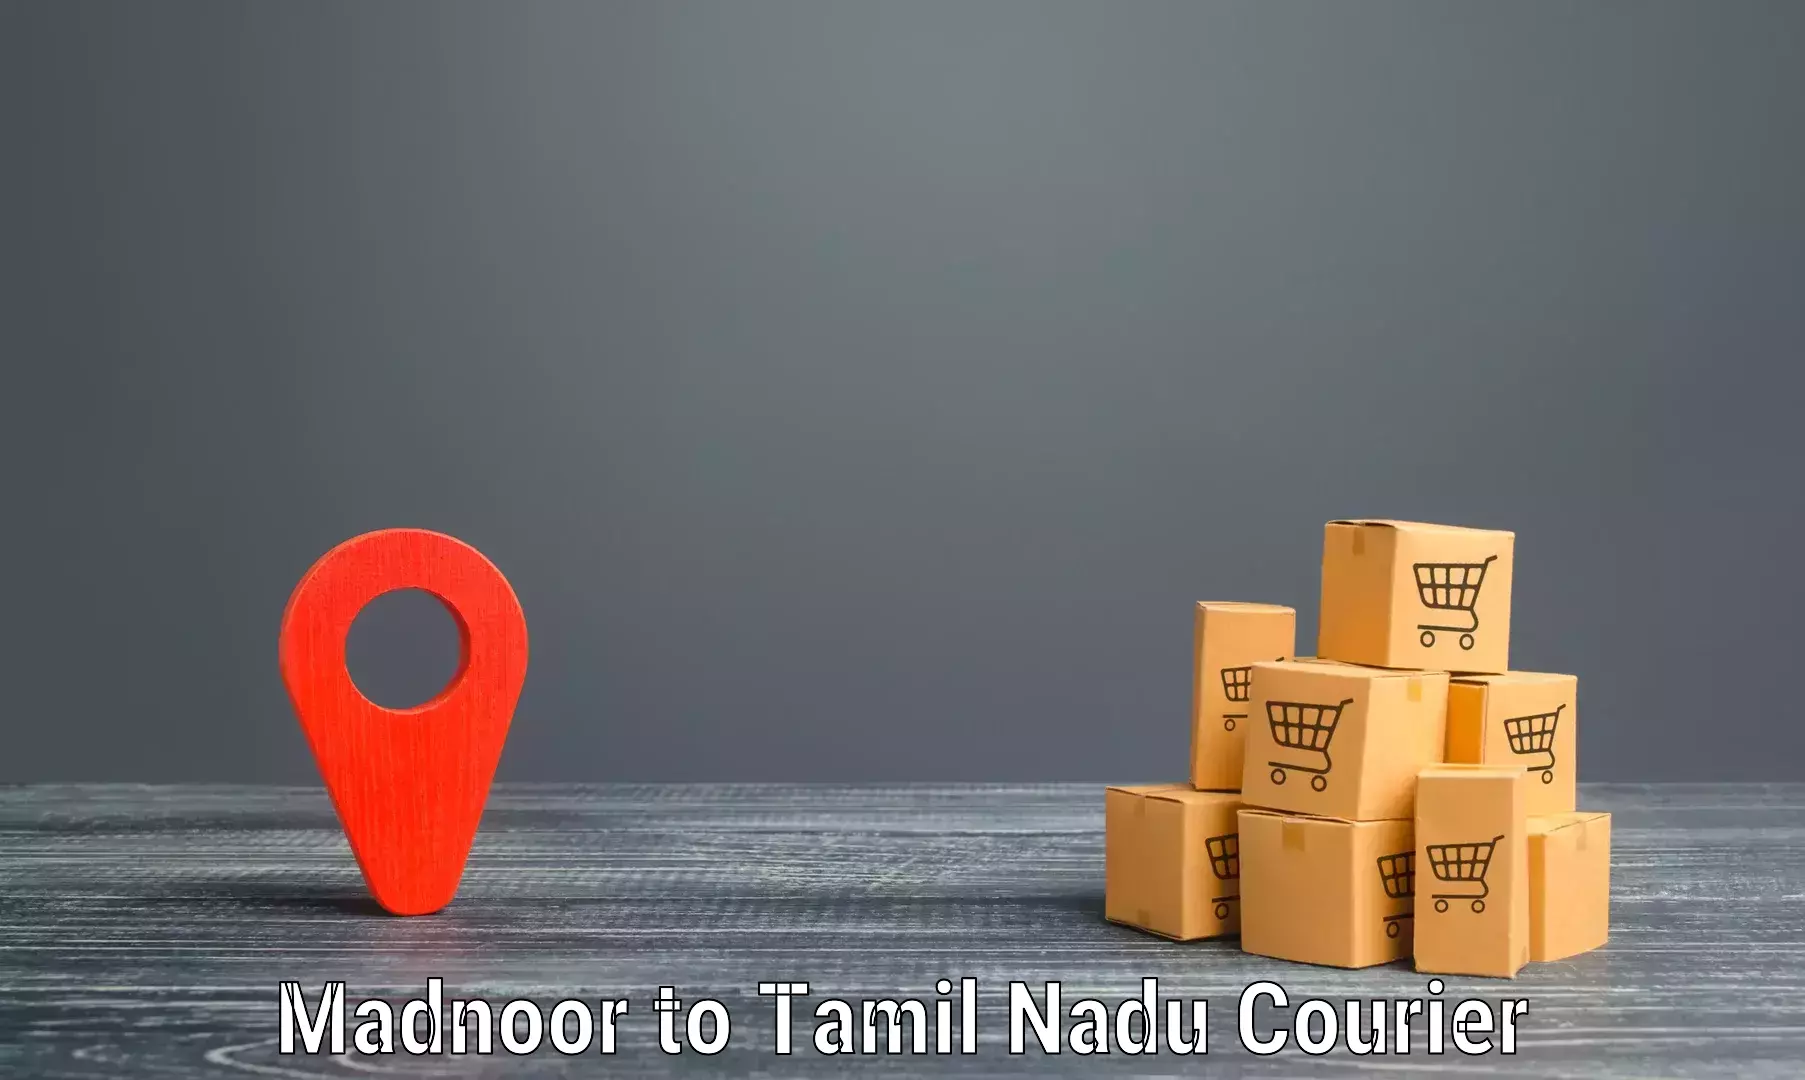 Rapid freight solutions Madnoor to Tiruchengodu